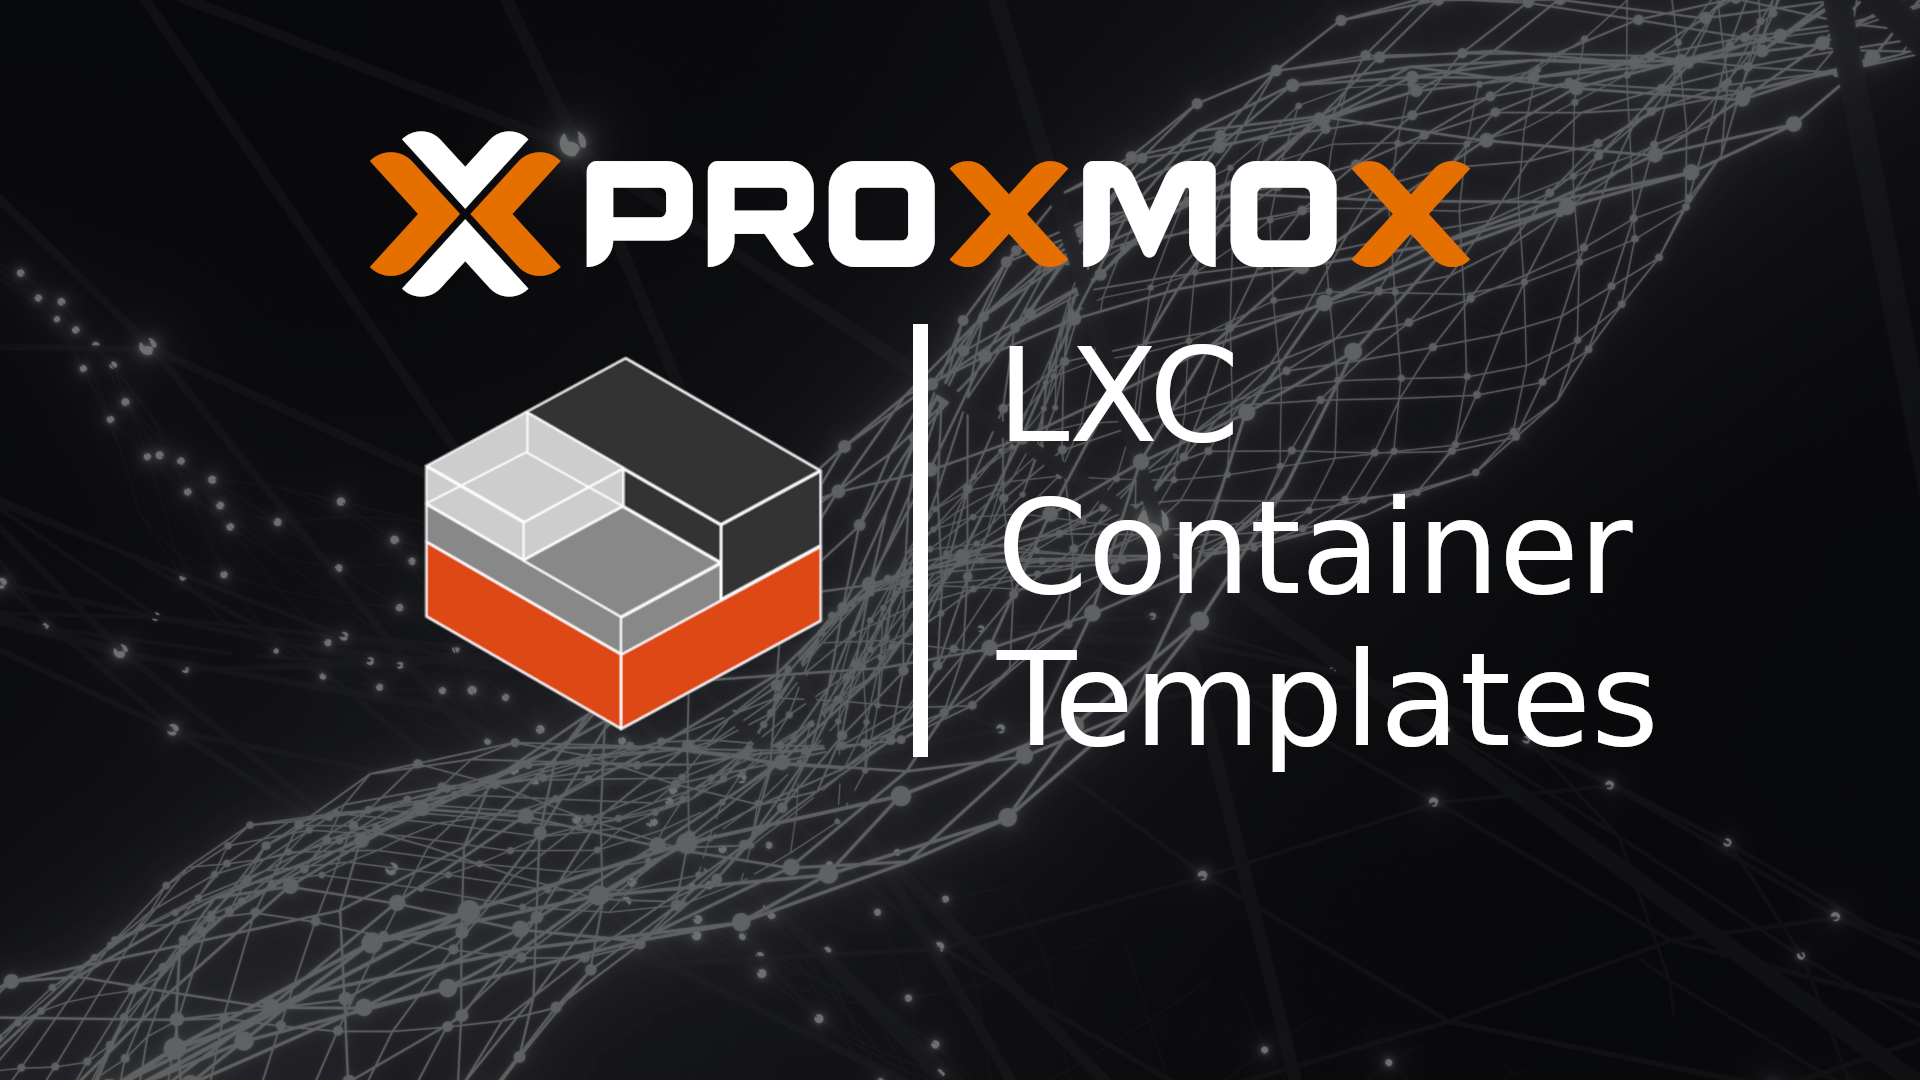 Proxmox LXC Templates